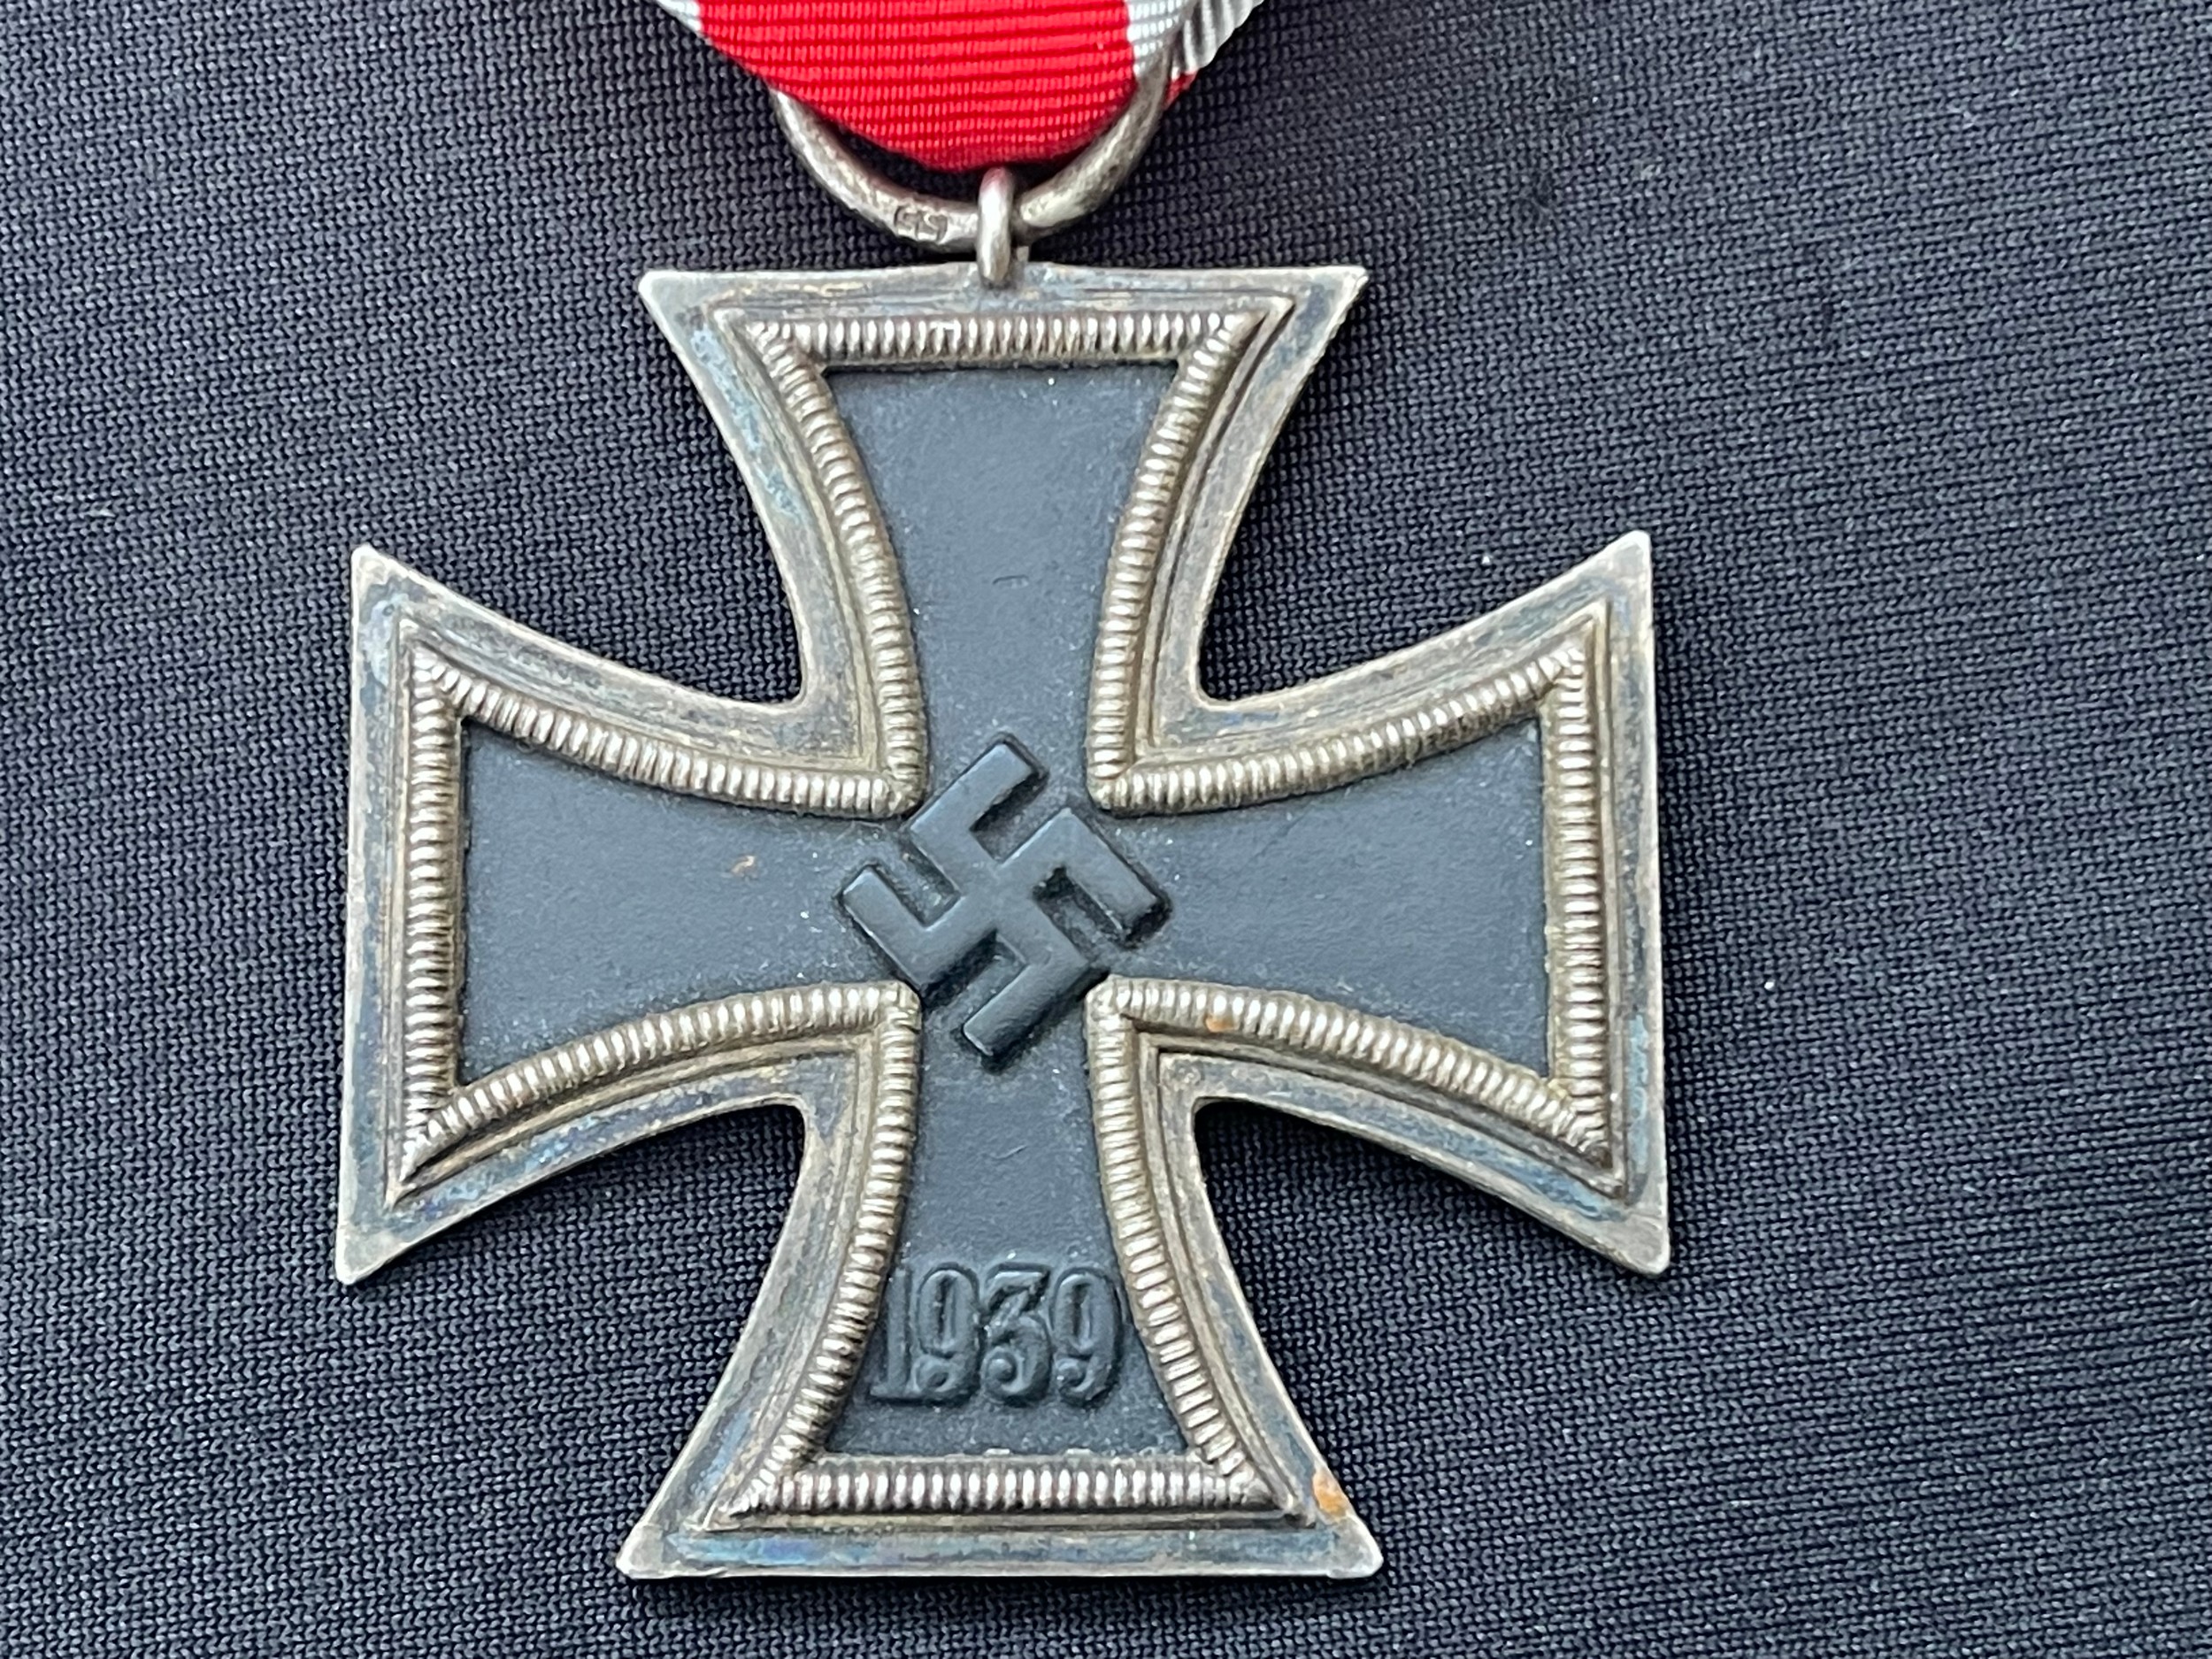 WW2 Third Reich Eisernes Kreuz 2. Klasse. Iron Cross 2nd class 1939. Maker mark to ring "55" for "JE